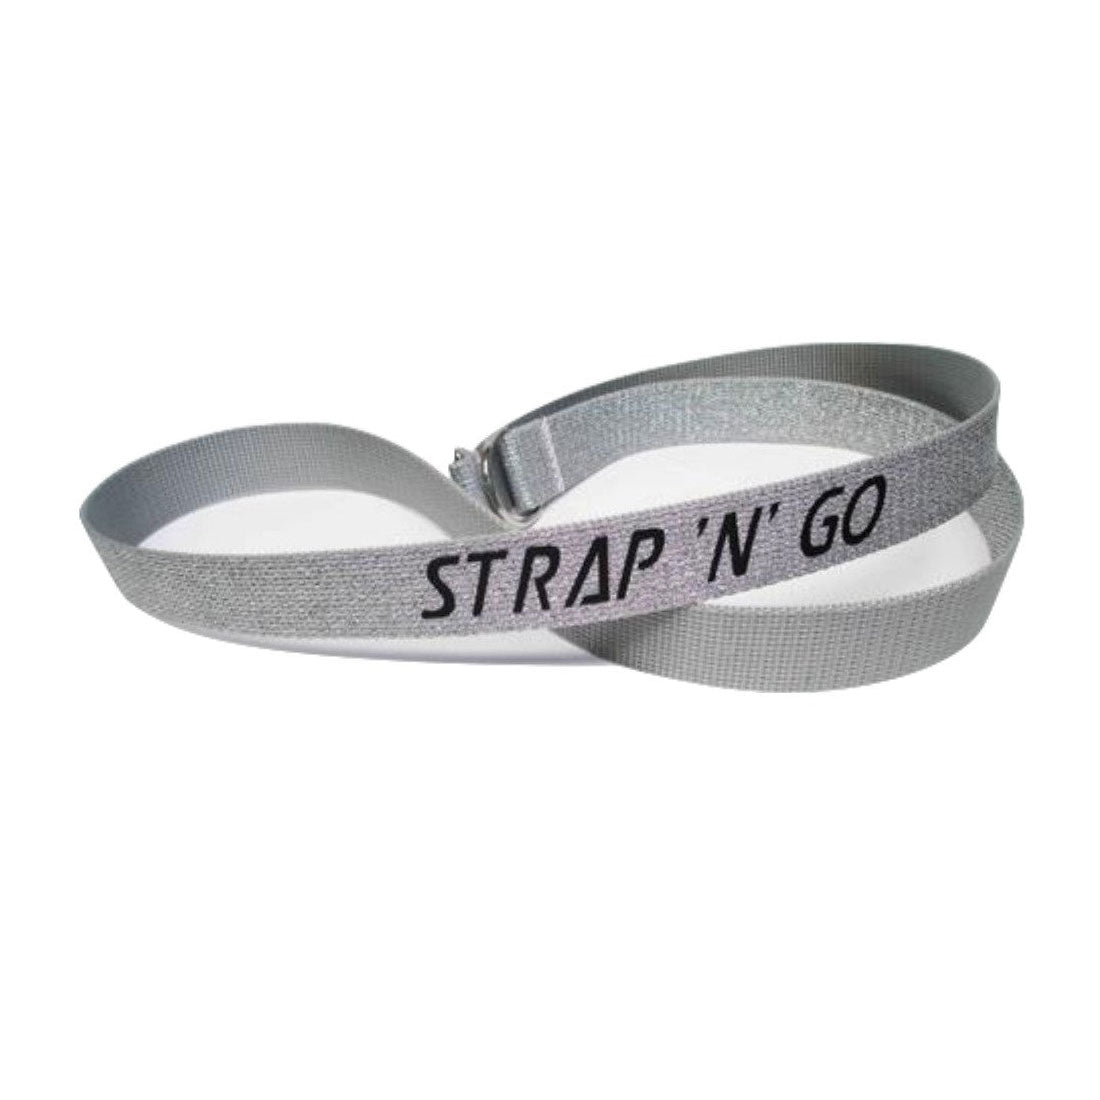 Strap N Go Skate Noose/Leash - Glitter Glitter Silver Roller Skate Accessories